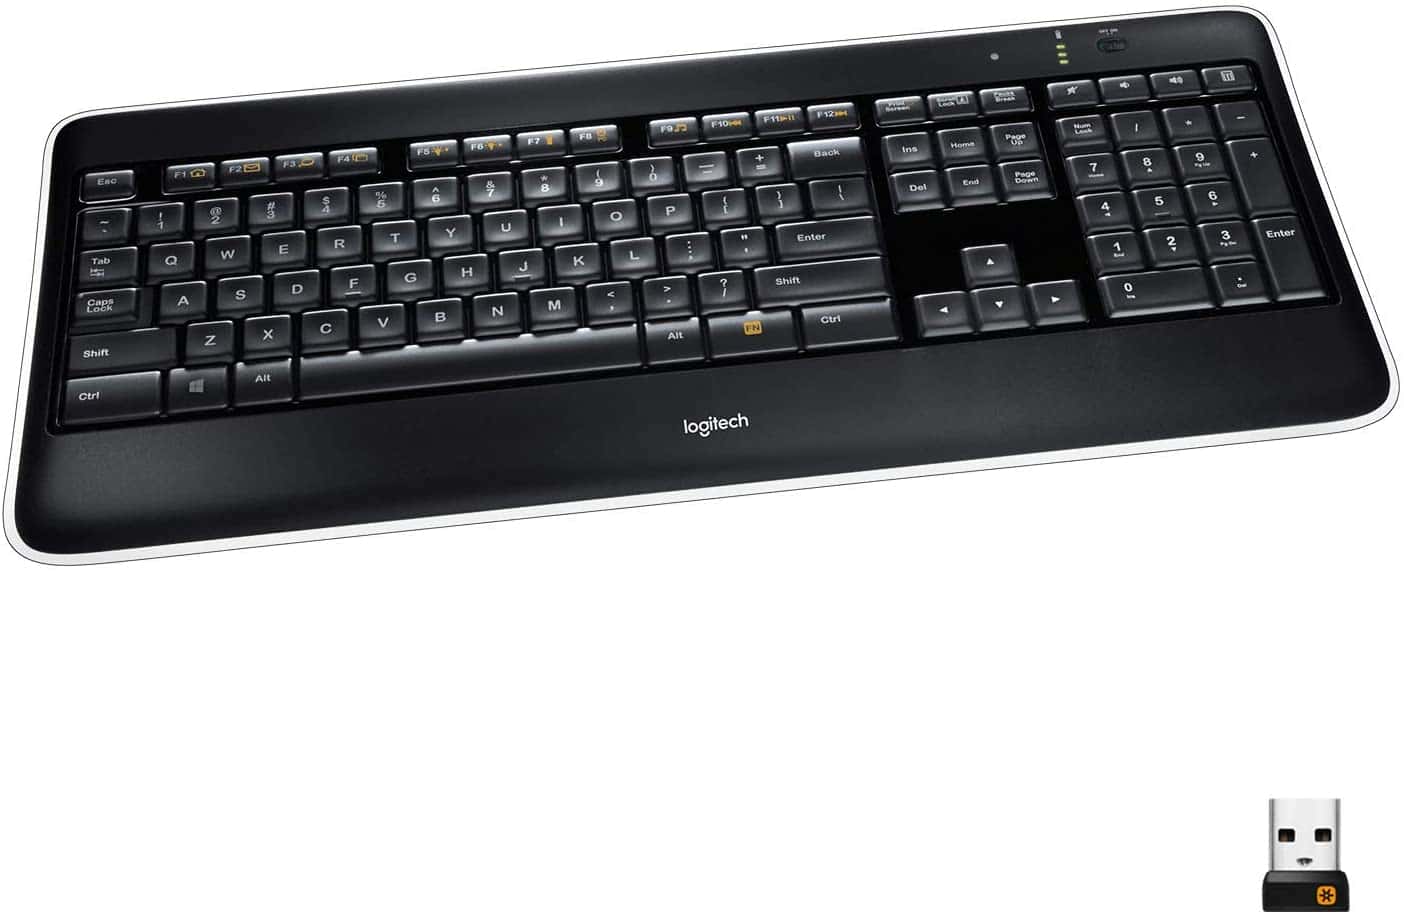 Deal Alert: Awesome discount on Logitech K800 Wireless Illuminated Keyboard is back!